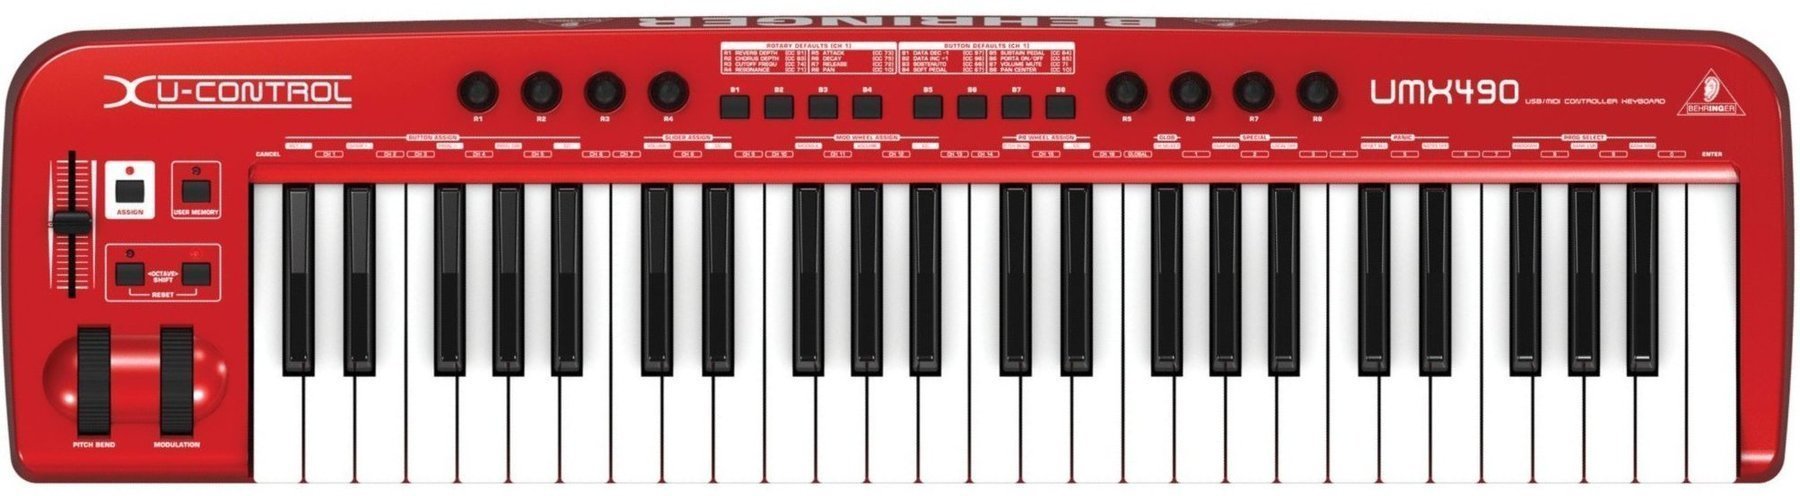 Миди клавиатура Behringer UMX 490 U-CONTROL